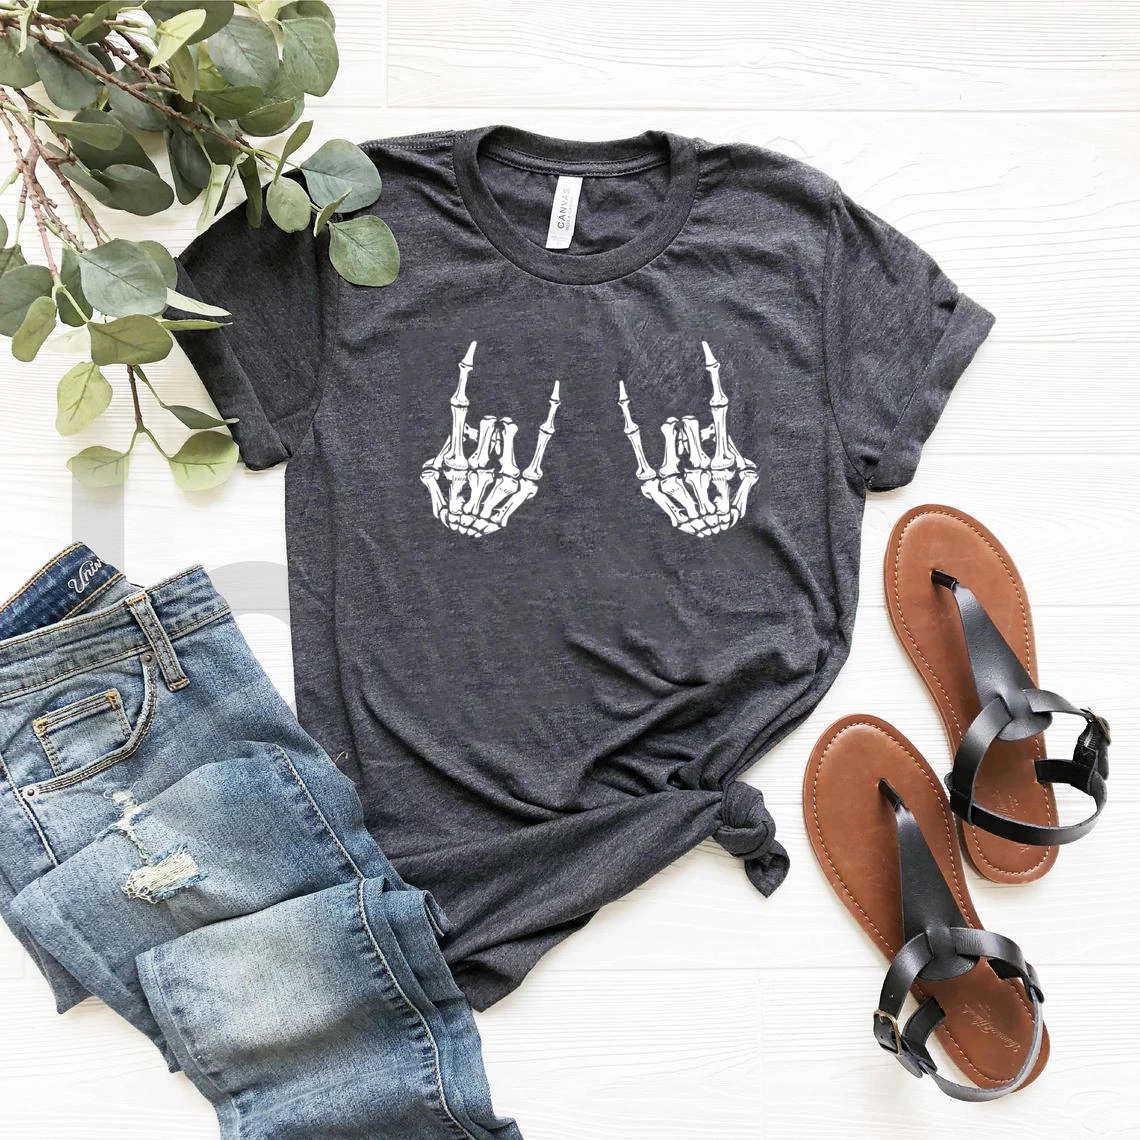 Футболка Rock on Skeleton Hands футболка со скелетом с металлическими пальцами забавная на